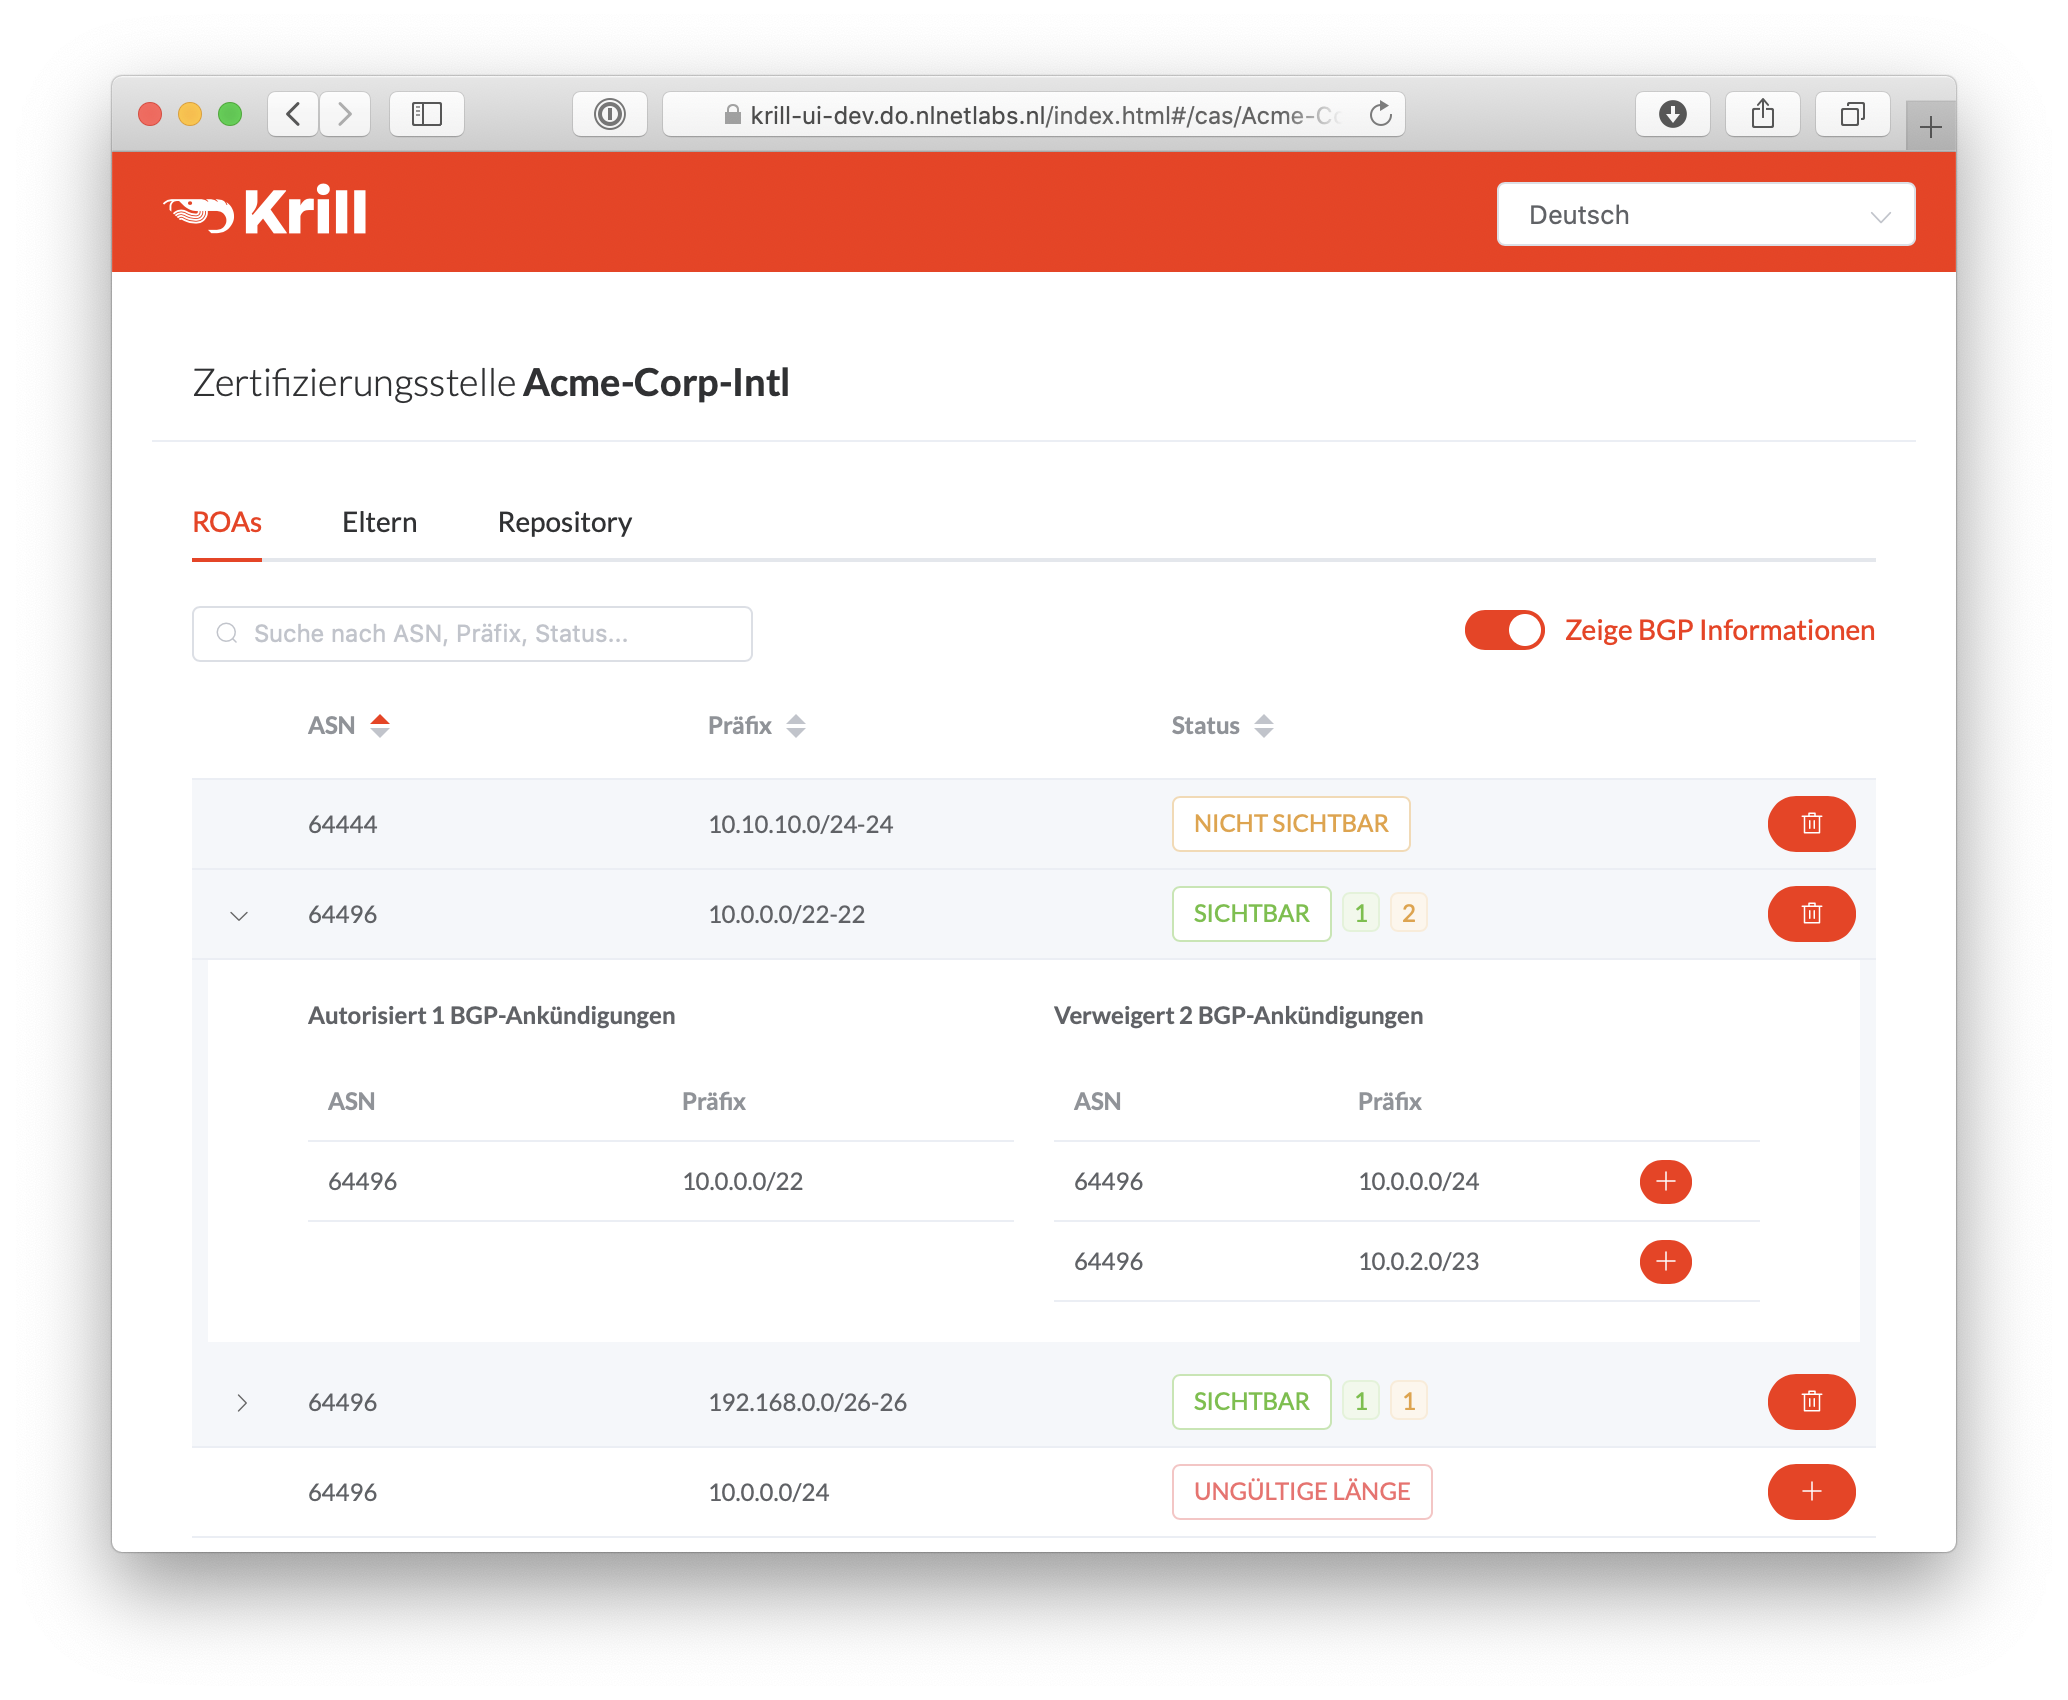 Krill user interface in German